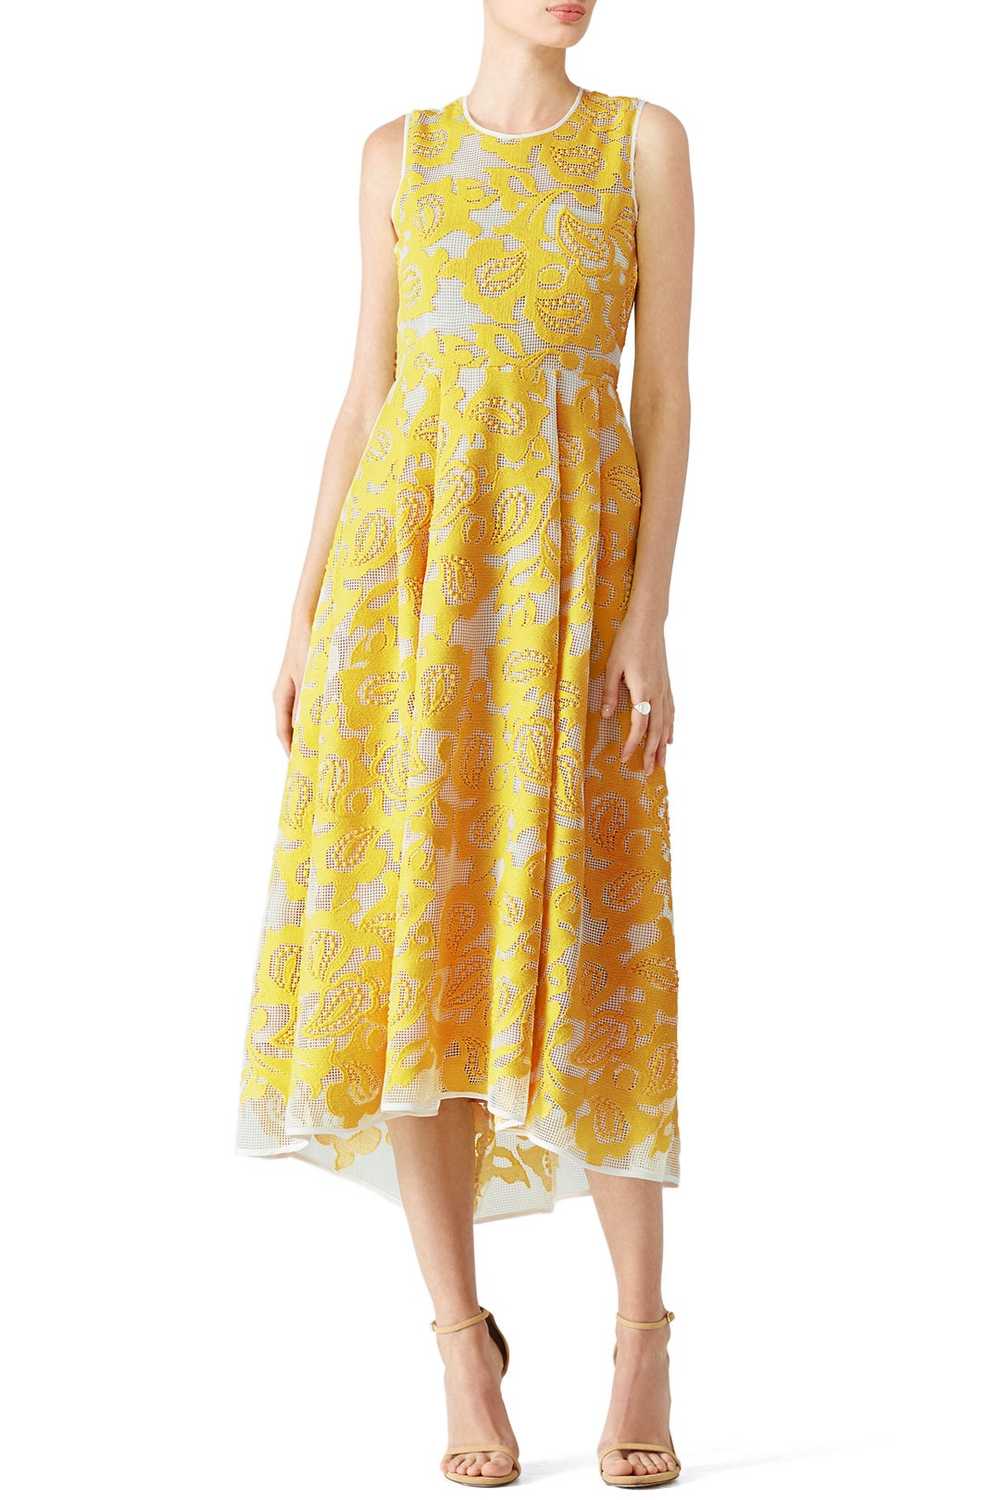 Hunter Bell Yellow Abstract Stitch Dress - image 1